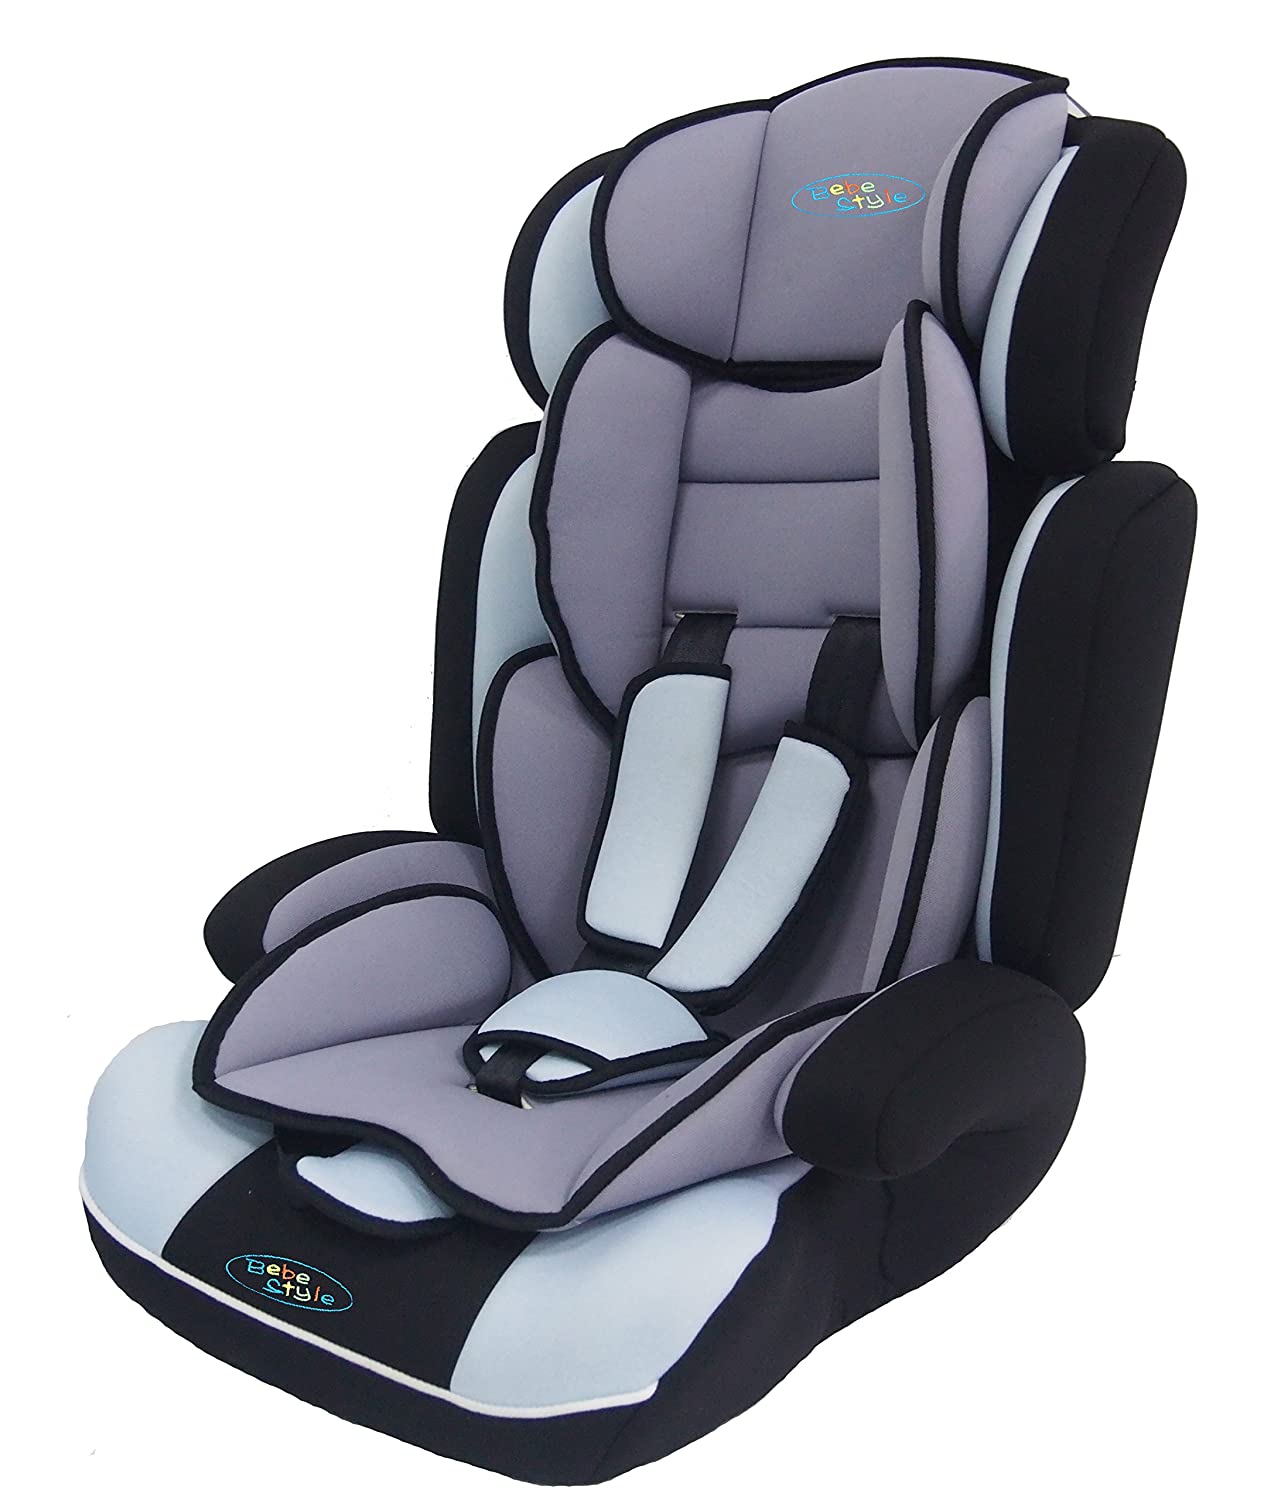 Bebe Style Child\'s Car Seat – Black Blue